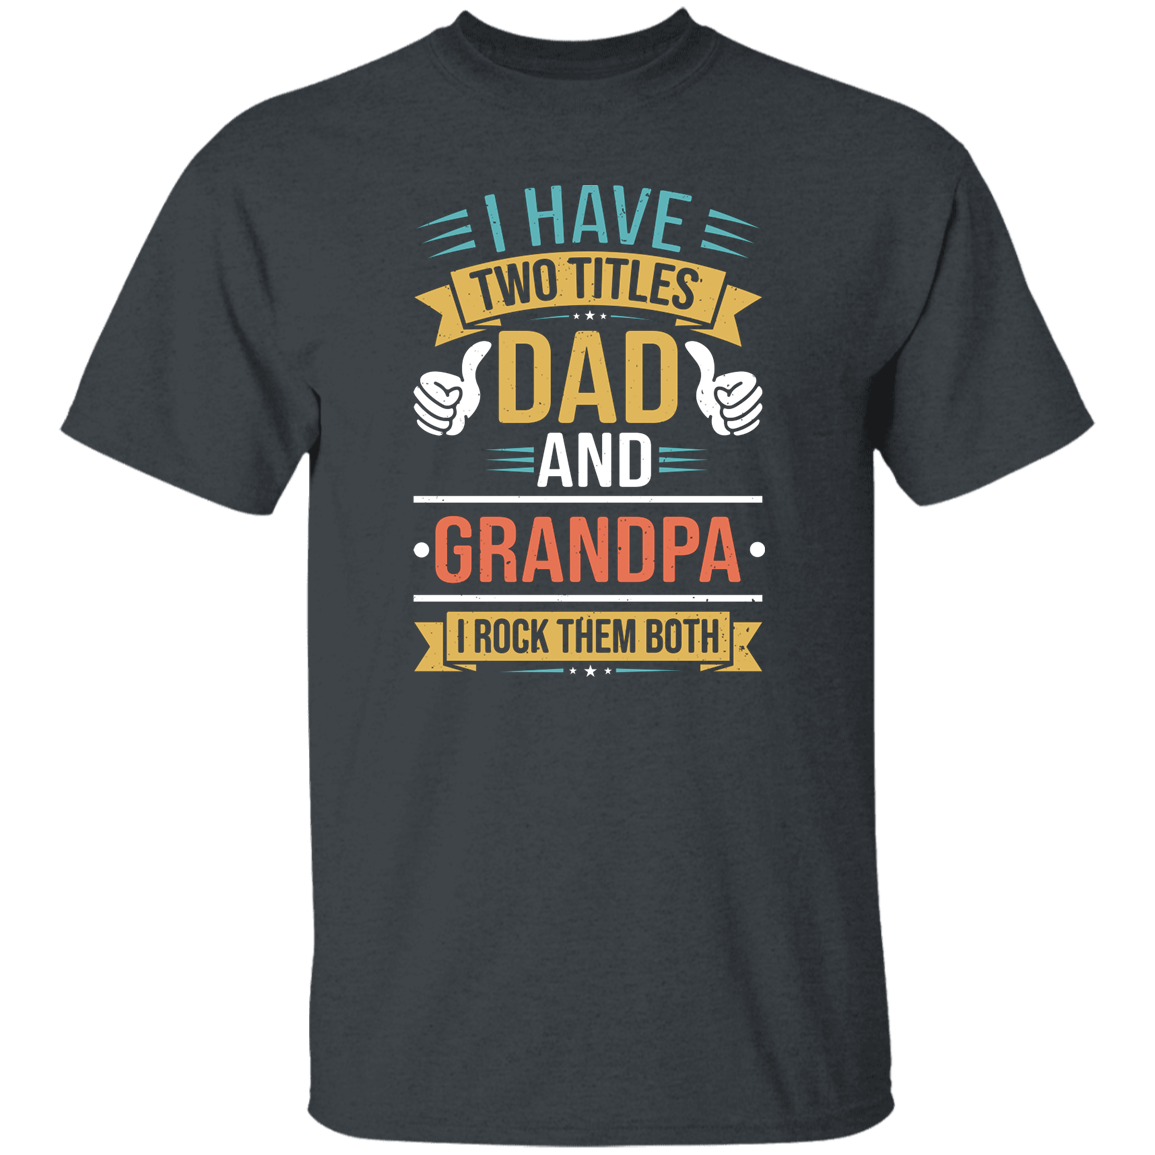 Dad and Grandpa Titles T-Shirt